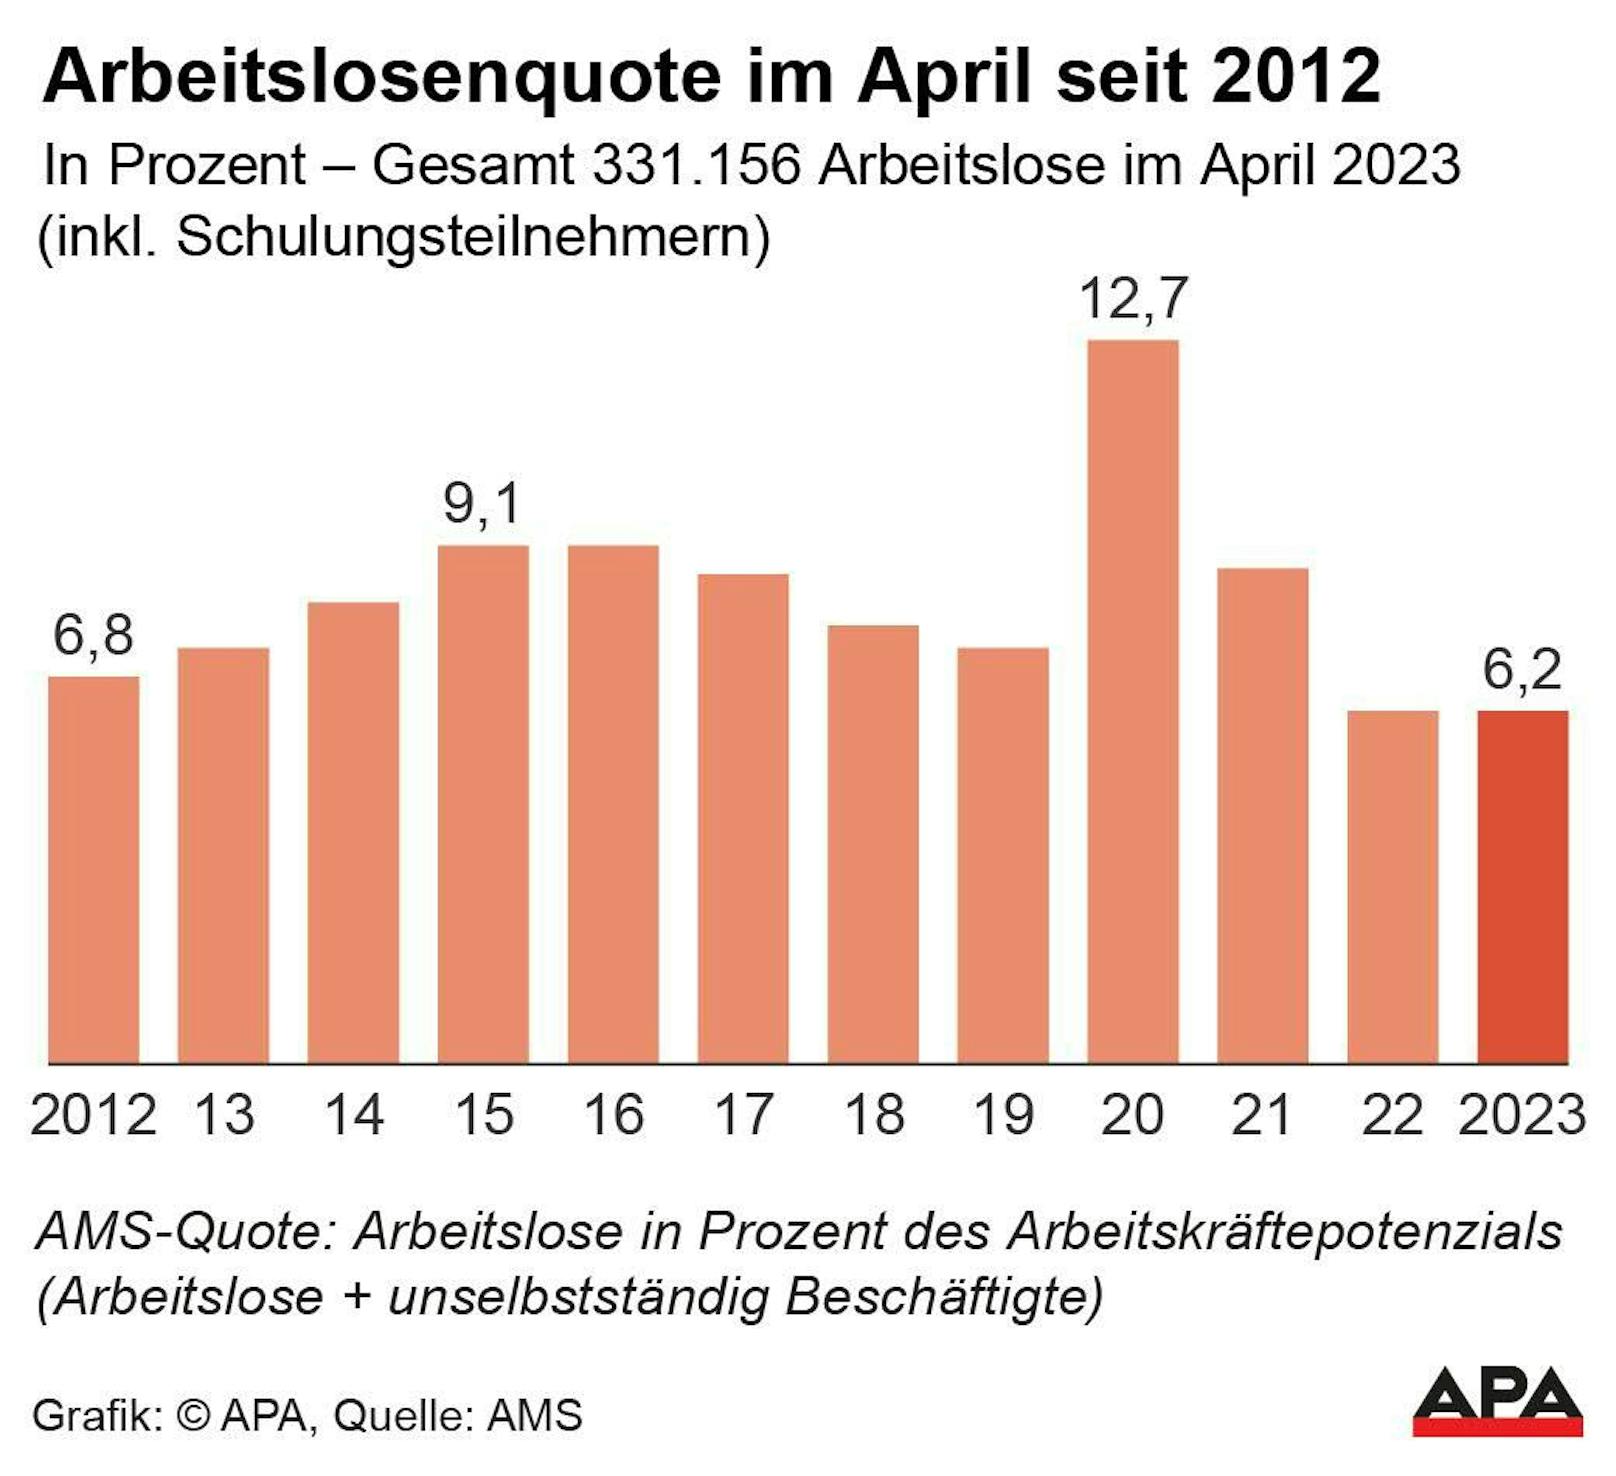 Arbeitslosenquote im April seit 2012